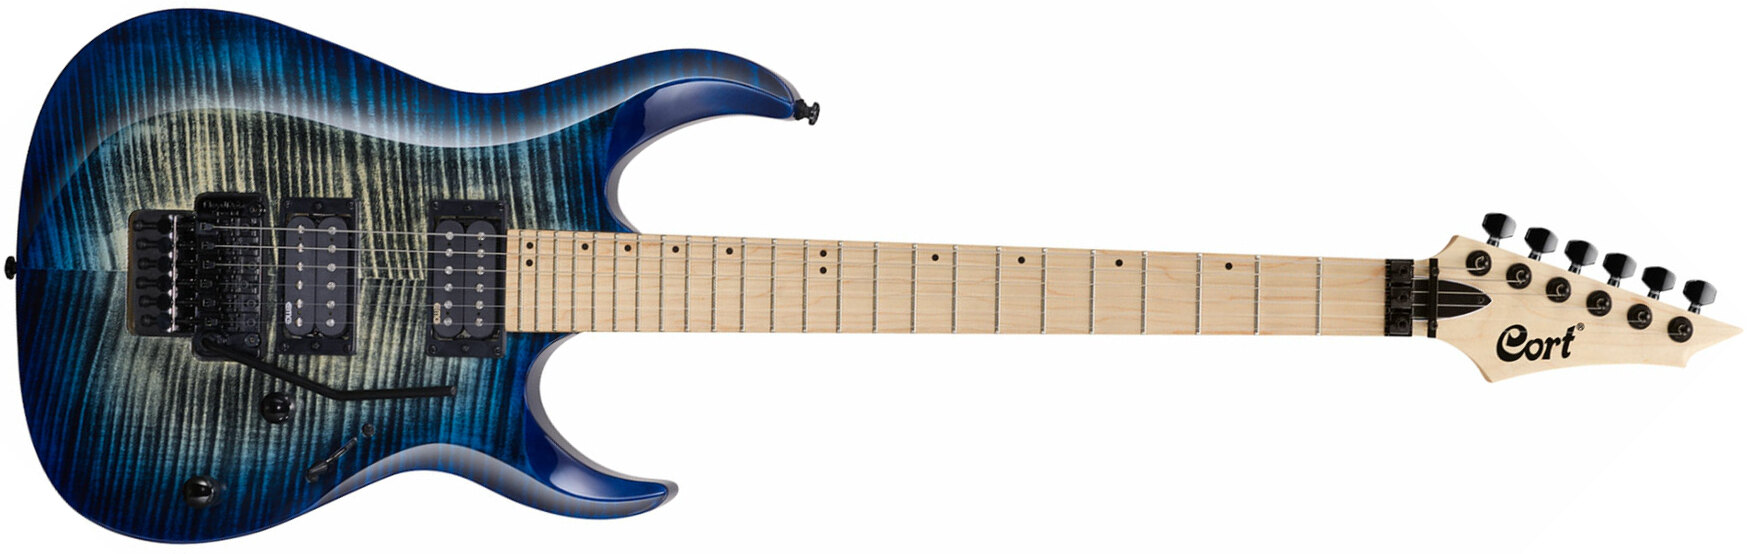 Cort X300 Fr Hh Mn - Blue Burst - Str shape electric guitar - Main picture